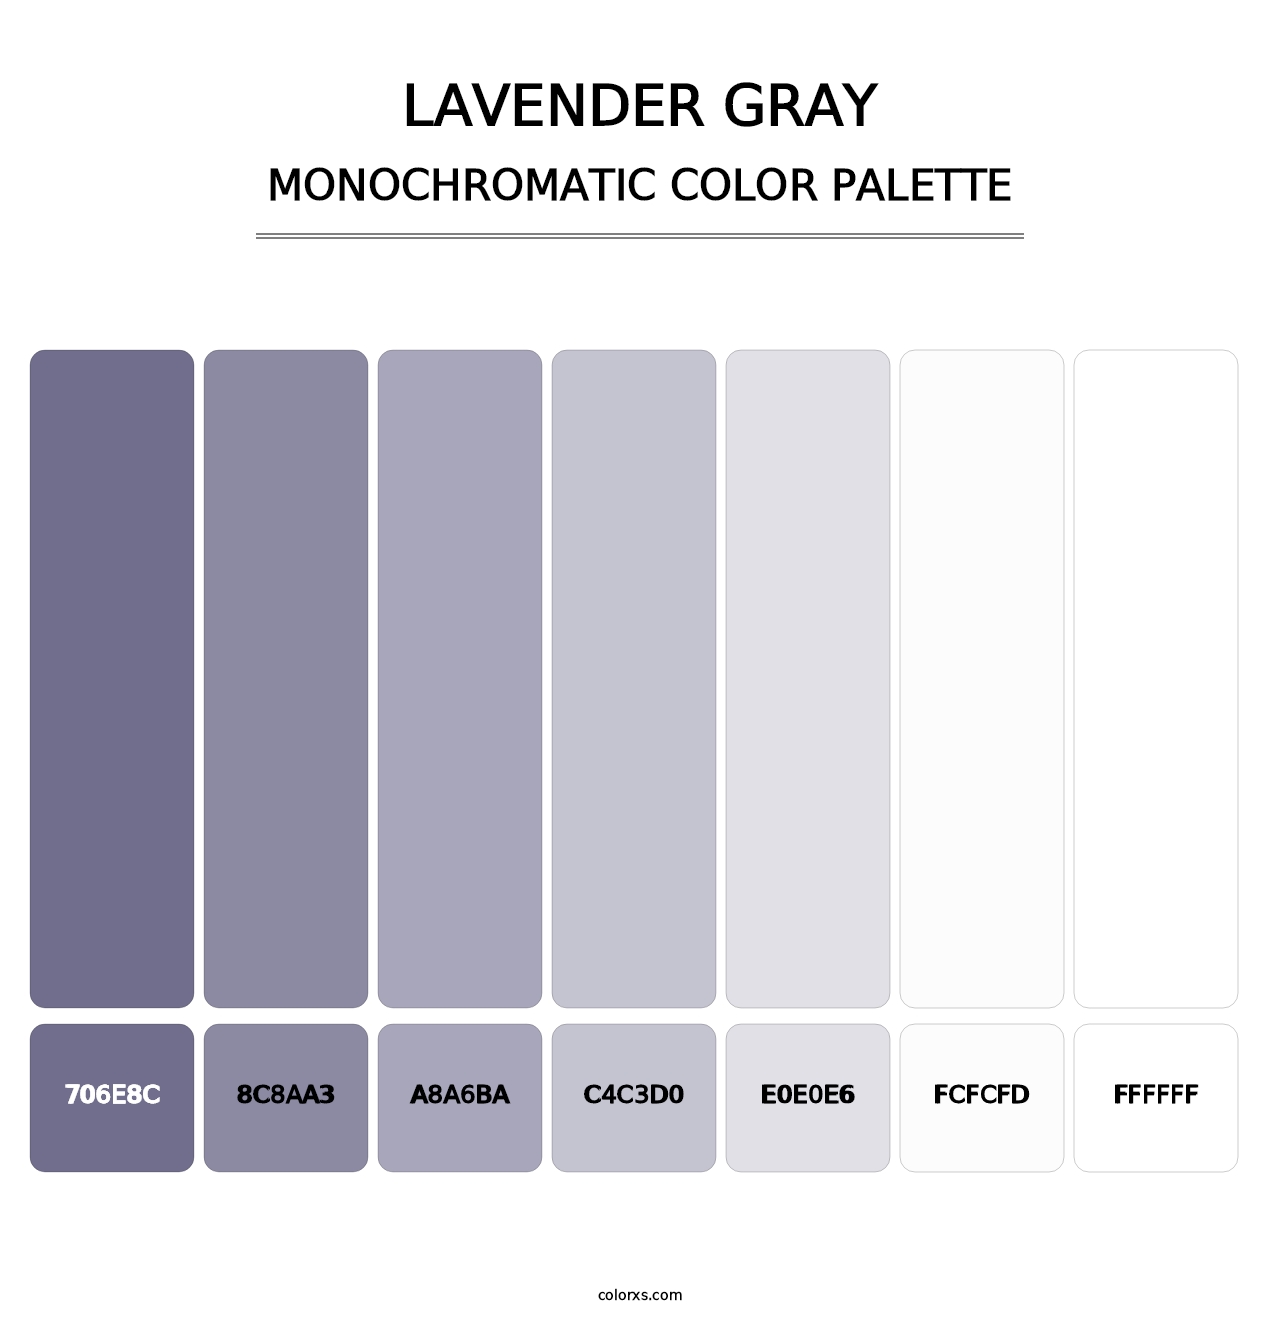 Lavender Gray - Monochromatic Color Palette